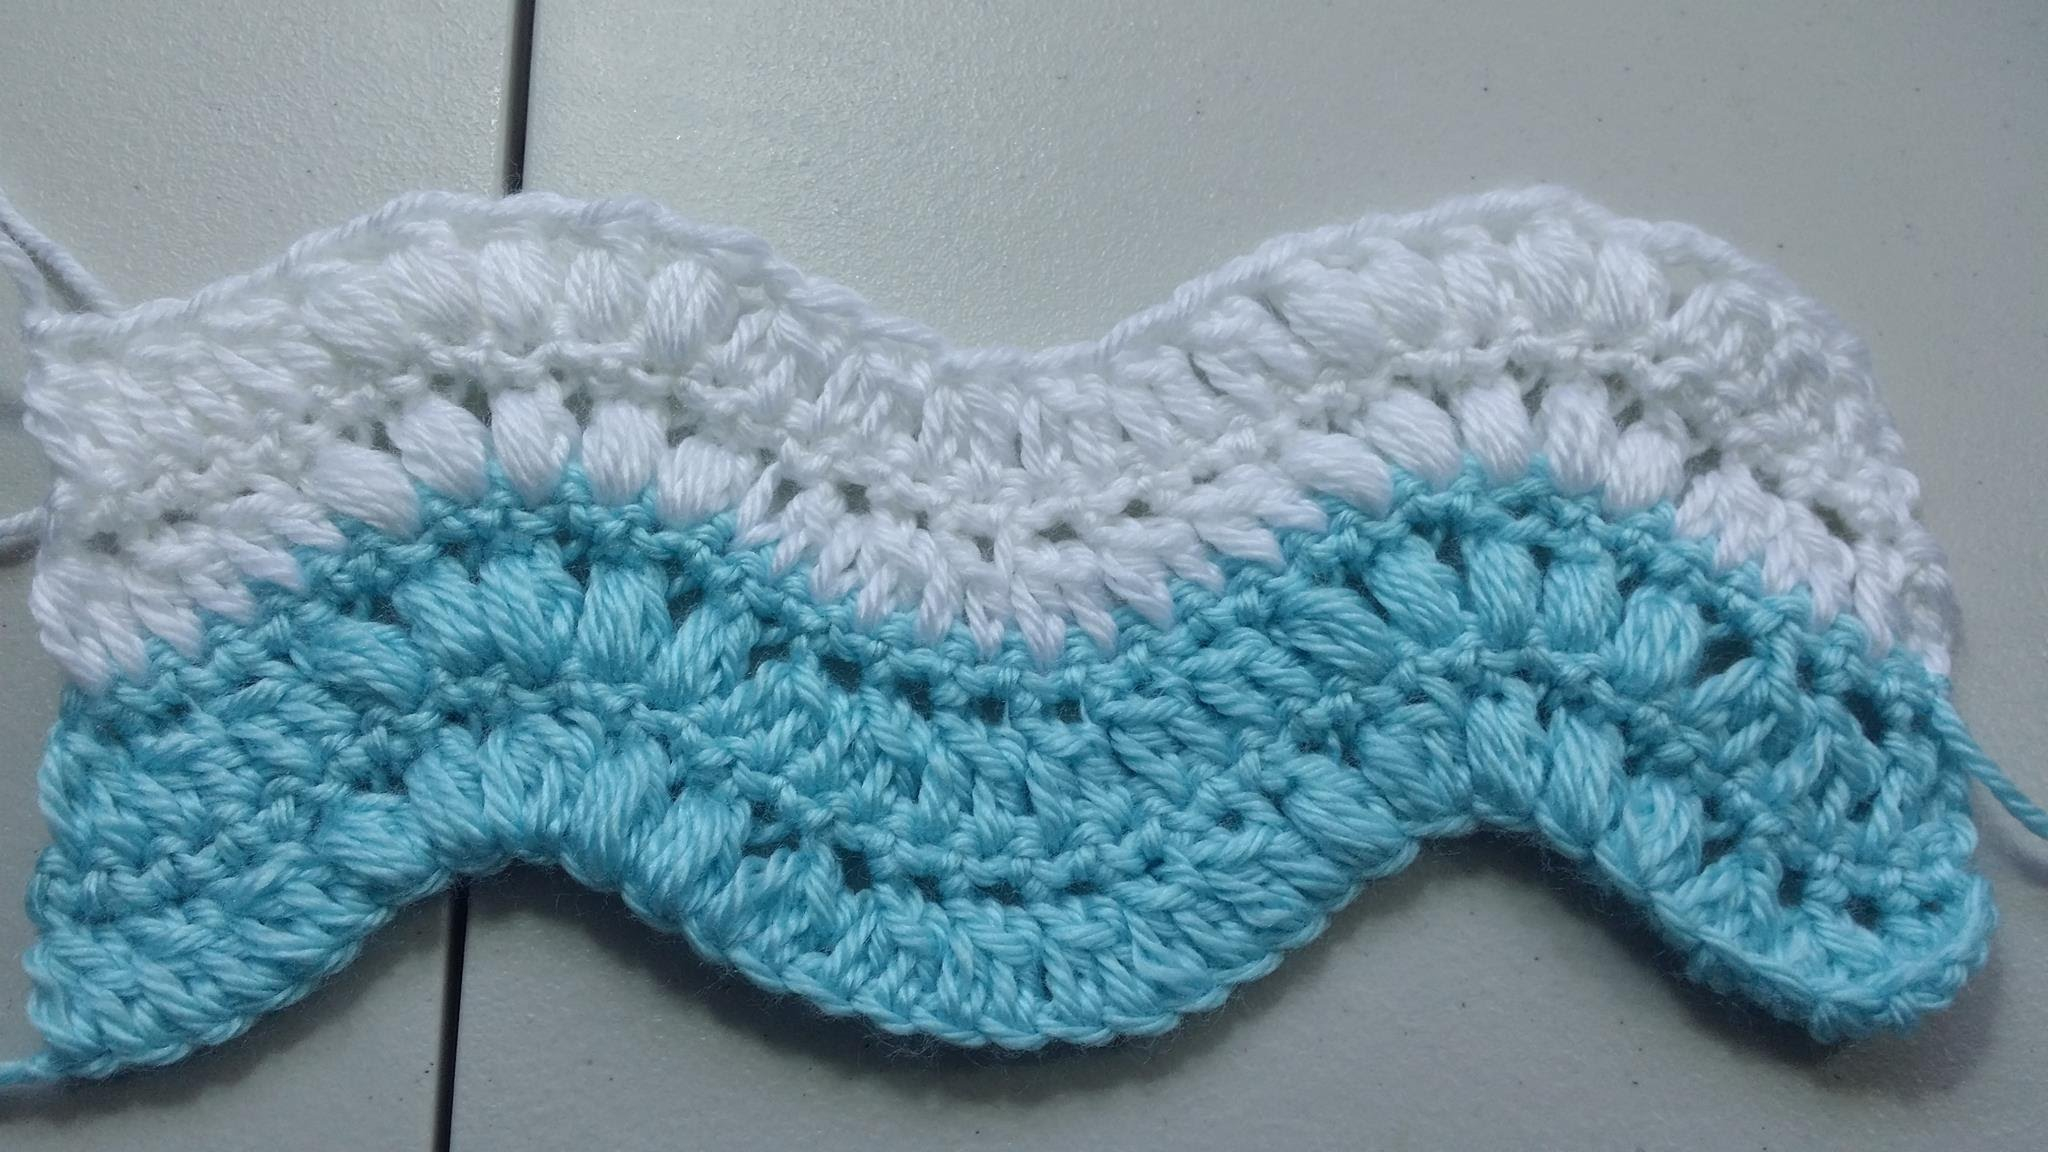 Chevron Zig Zag Crochet Pattern Crochet Stitches Video Tutorial Learn A New Stitch Crochet